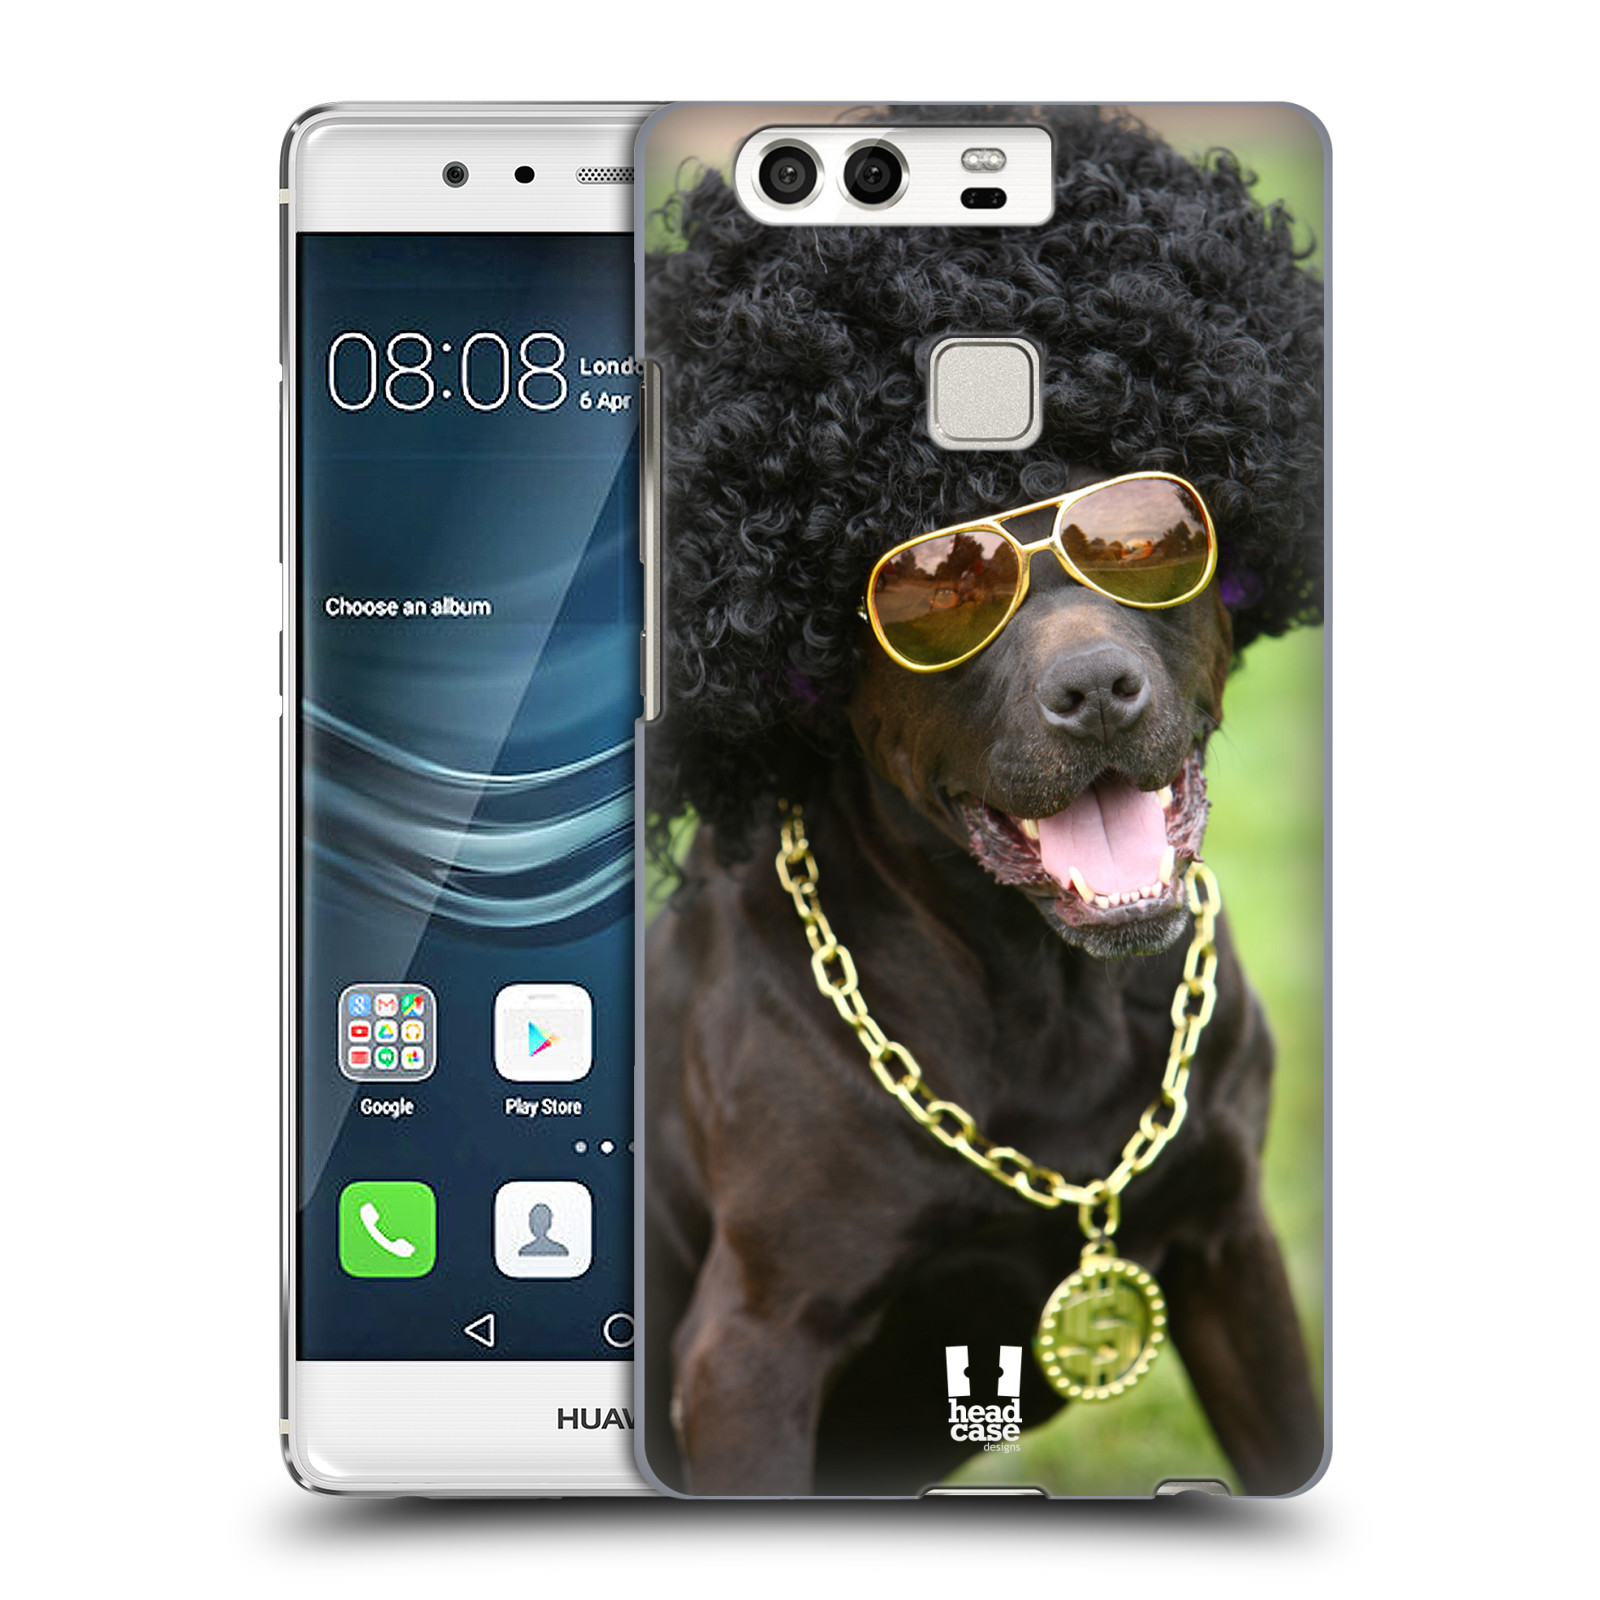 HEAD CASE plastový obal na mobil Huawei P9 / P9 DUAL SIM vzor Legrační zvířátka pejsek boháč